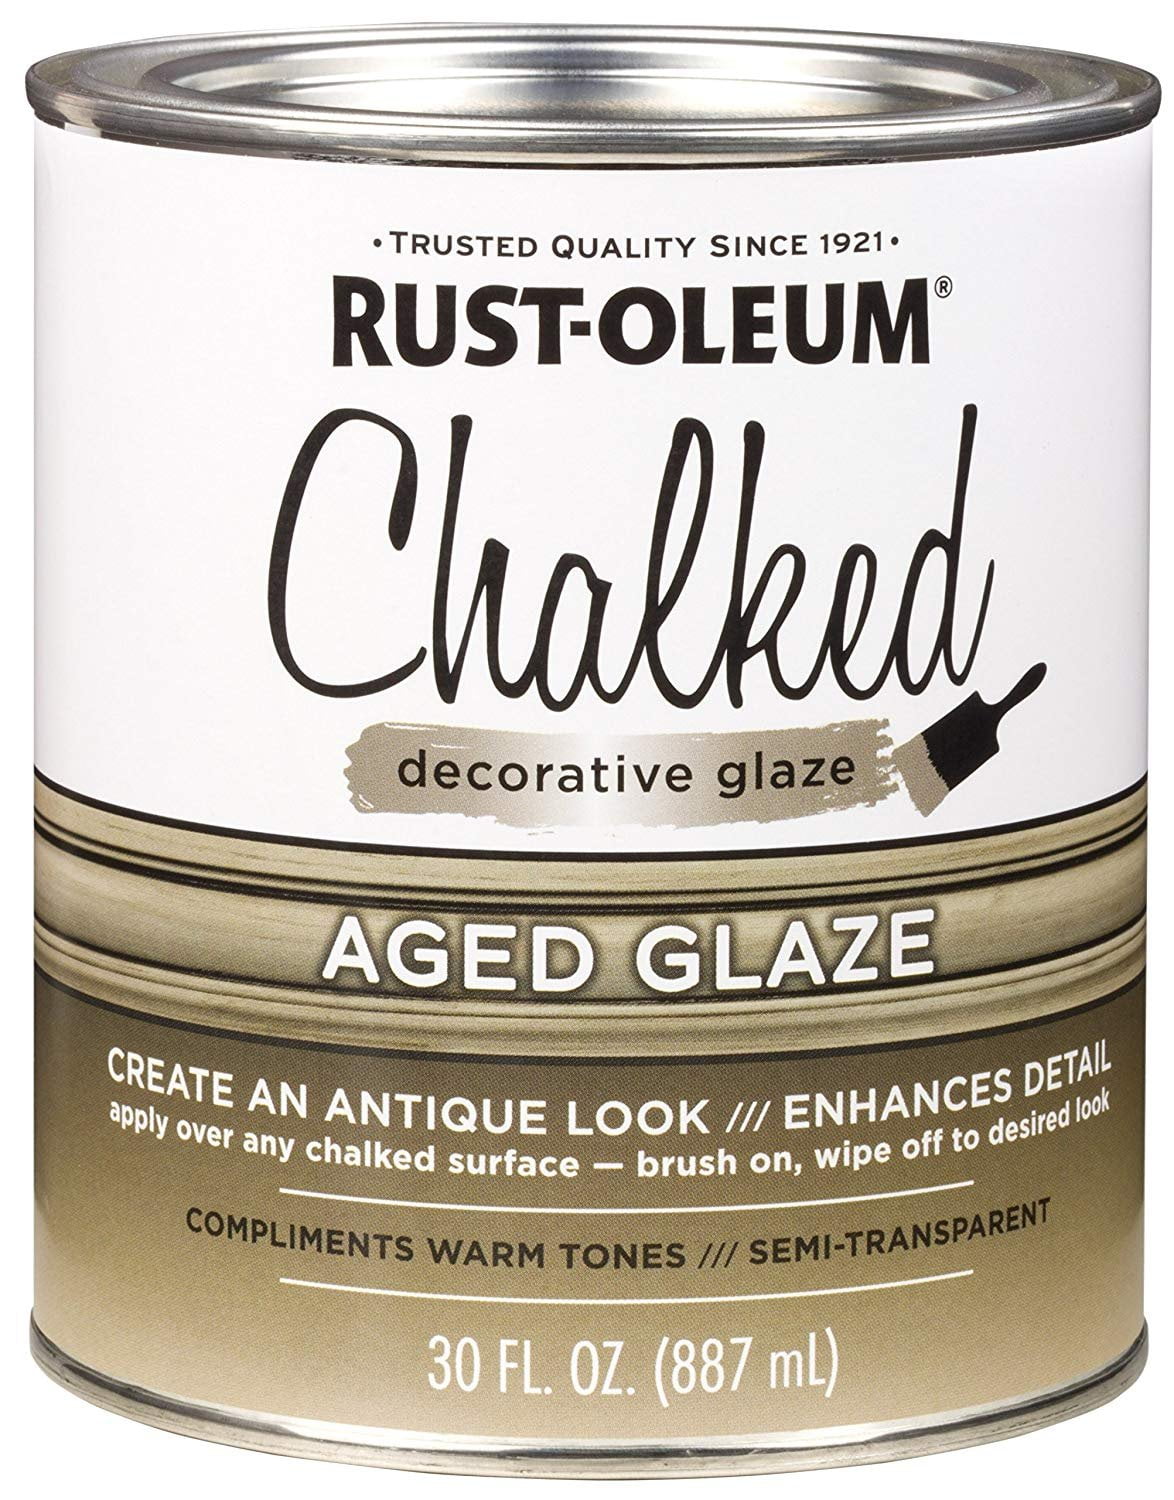 Rust-Oleum 329598-2PK Ultra Matte Interior Chalked Paint, 30 oz, Chiffon Cream, 2 Unit (Pack of 1)